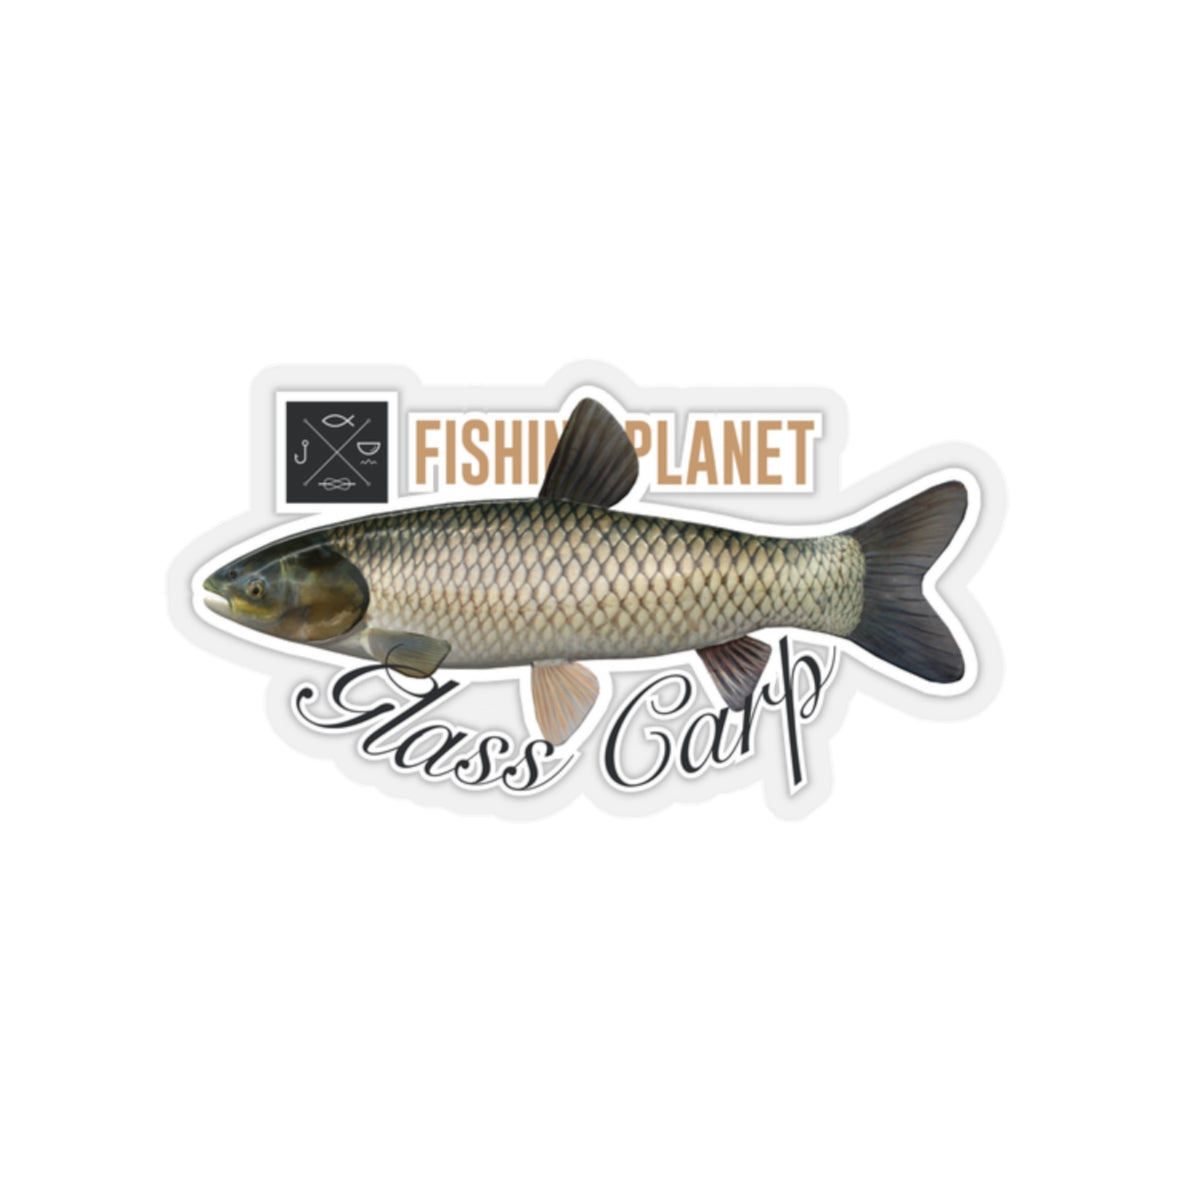 Fishing Planet Glass Carp Sticker (US shipping)